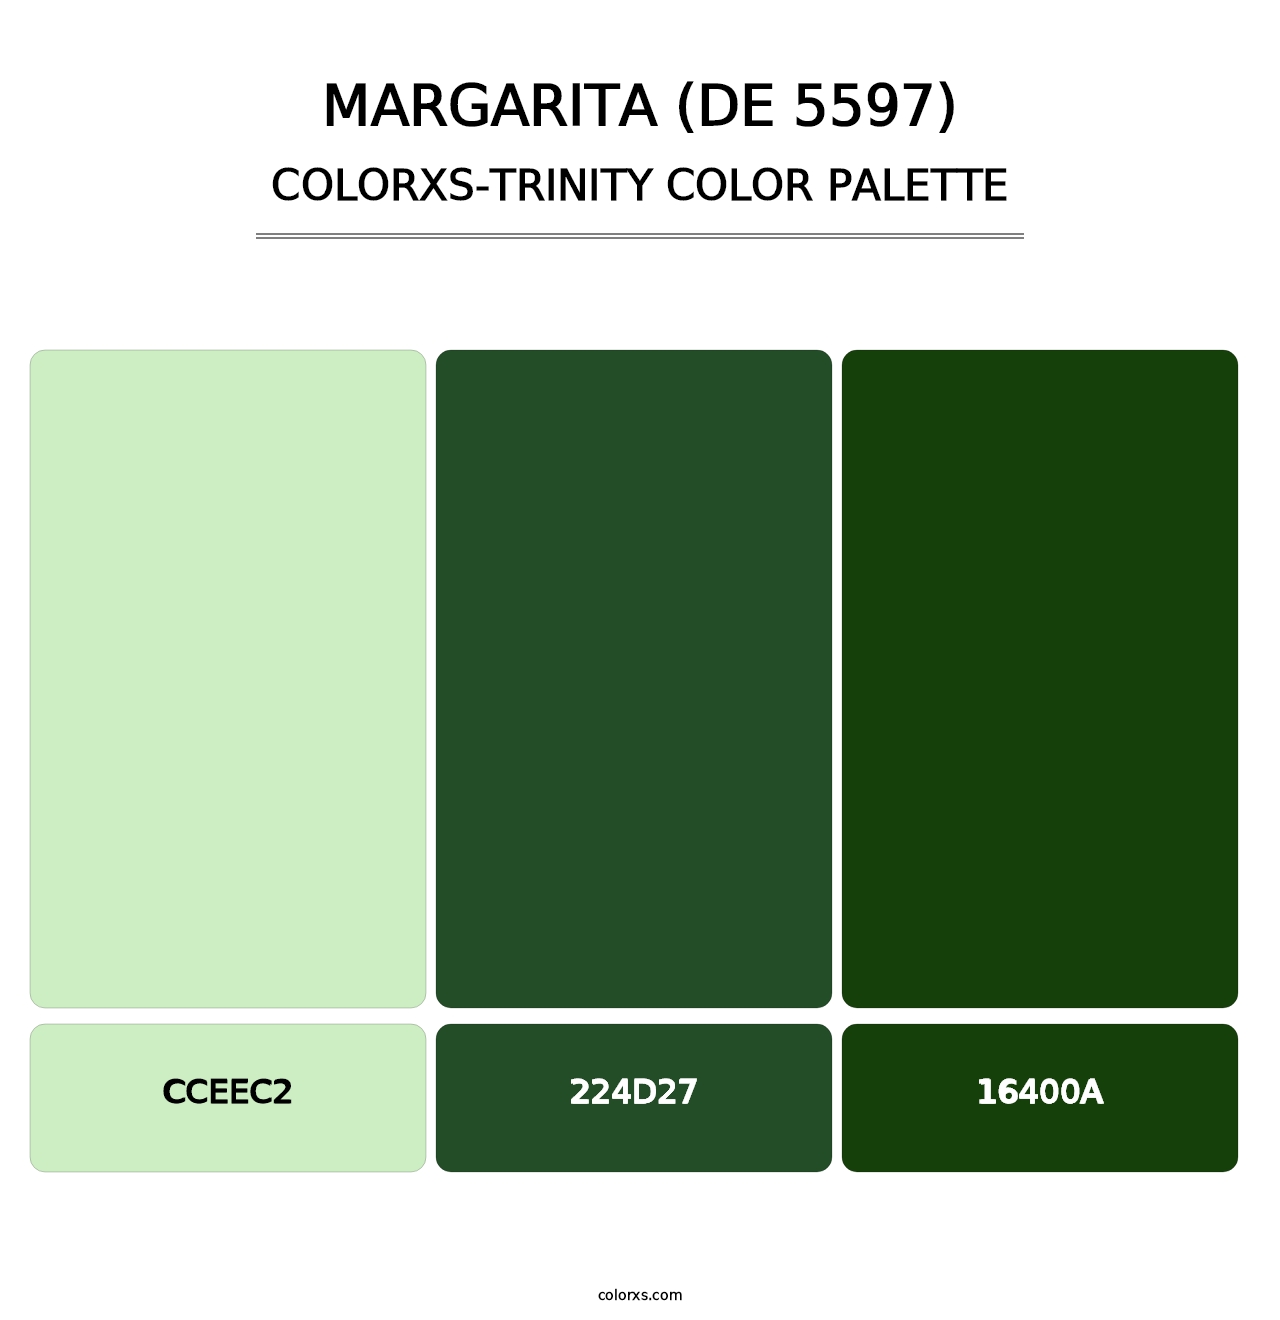 Margarita (DE 5597) - Colorxs Trinity Palette